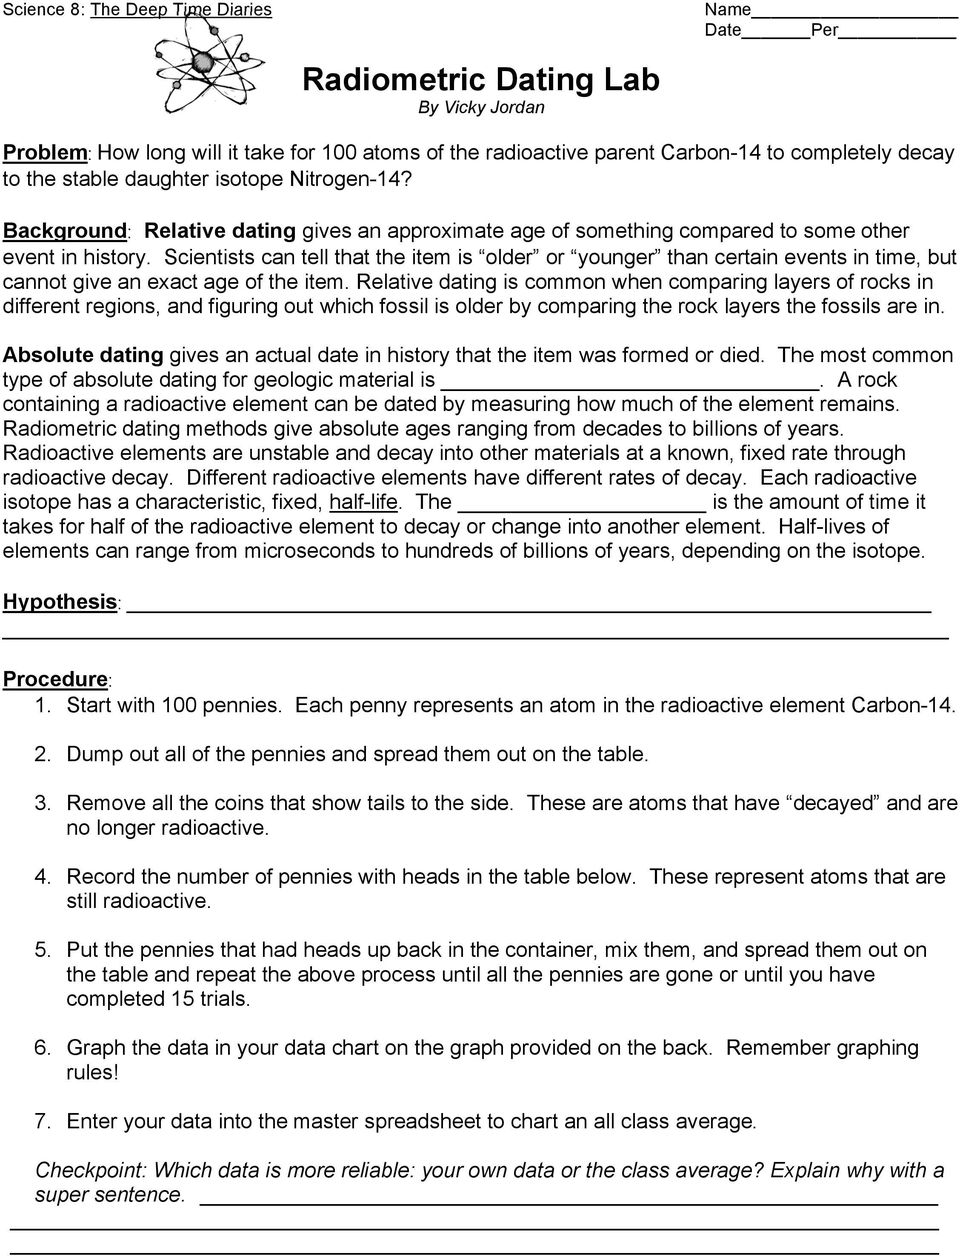 Relative dating worksheet answer key pdf